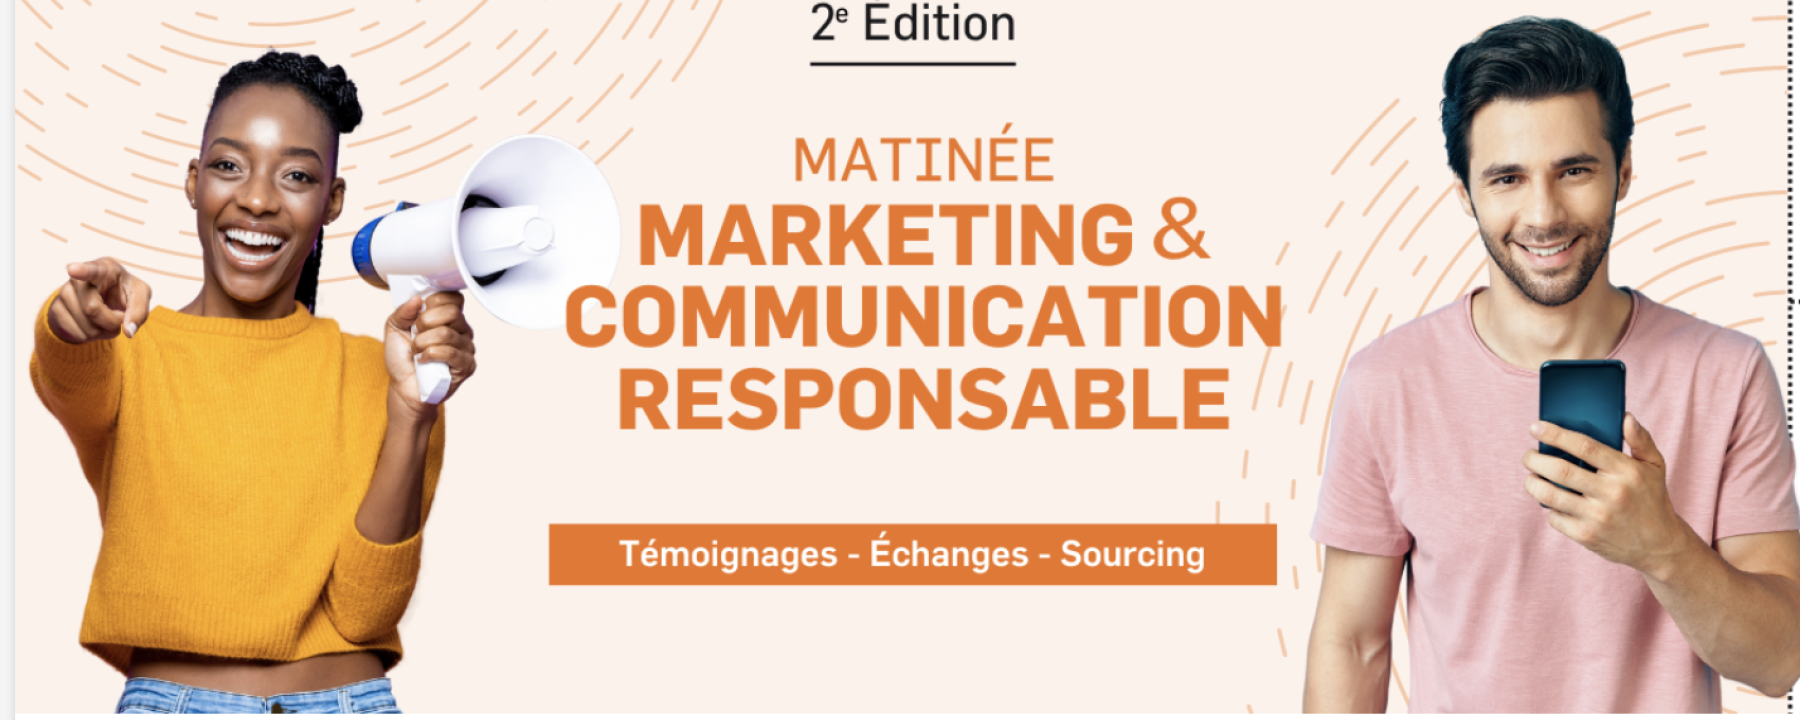 Matinée Marketing Communication Responsable #2